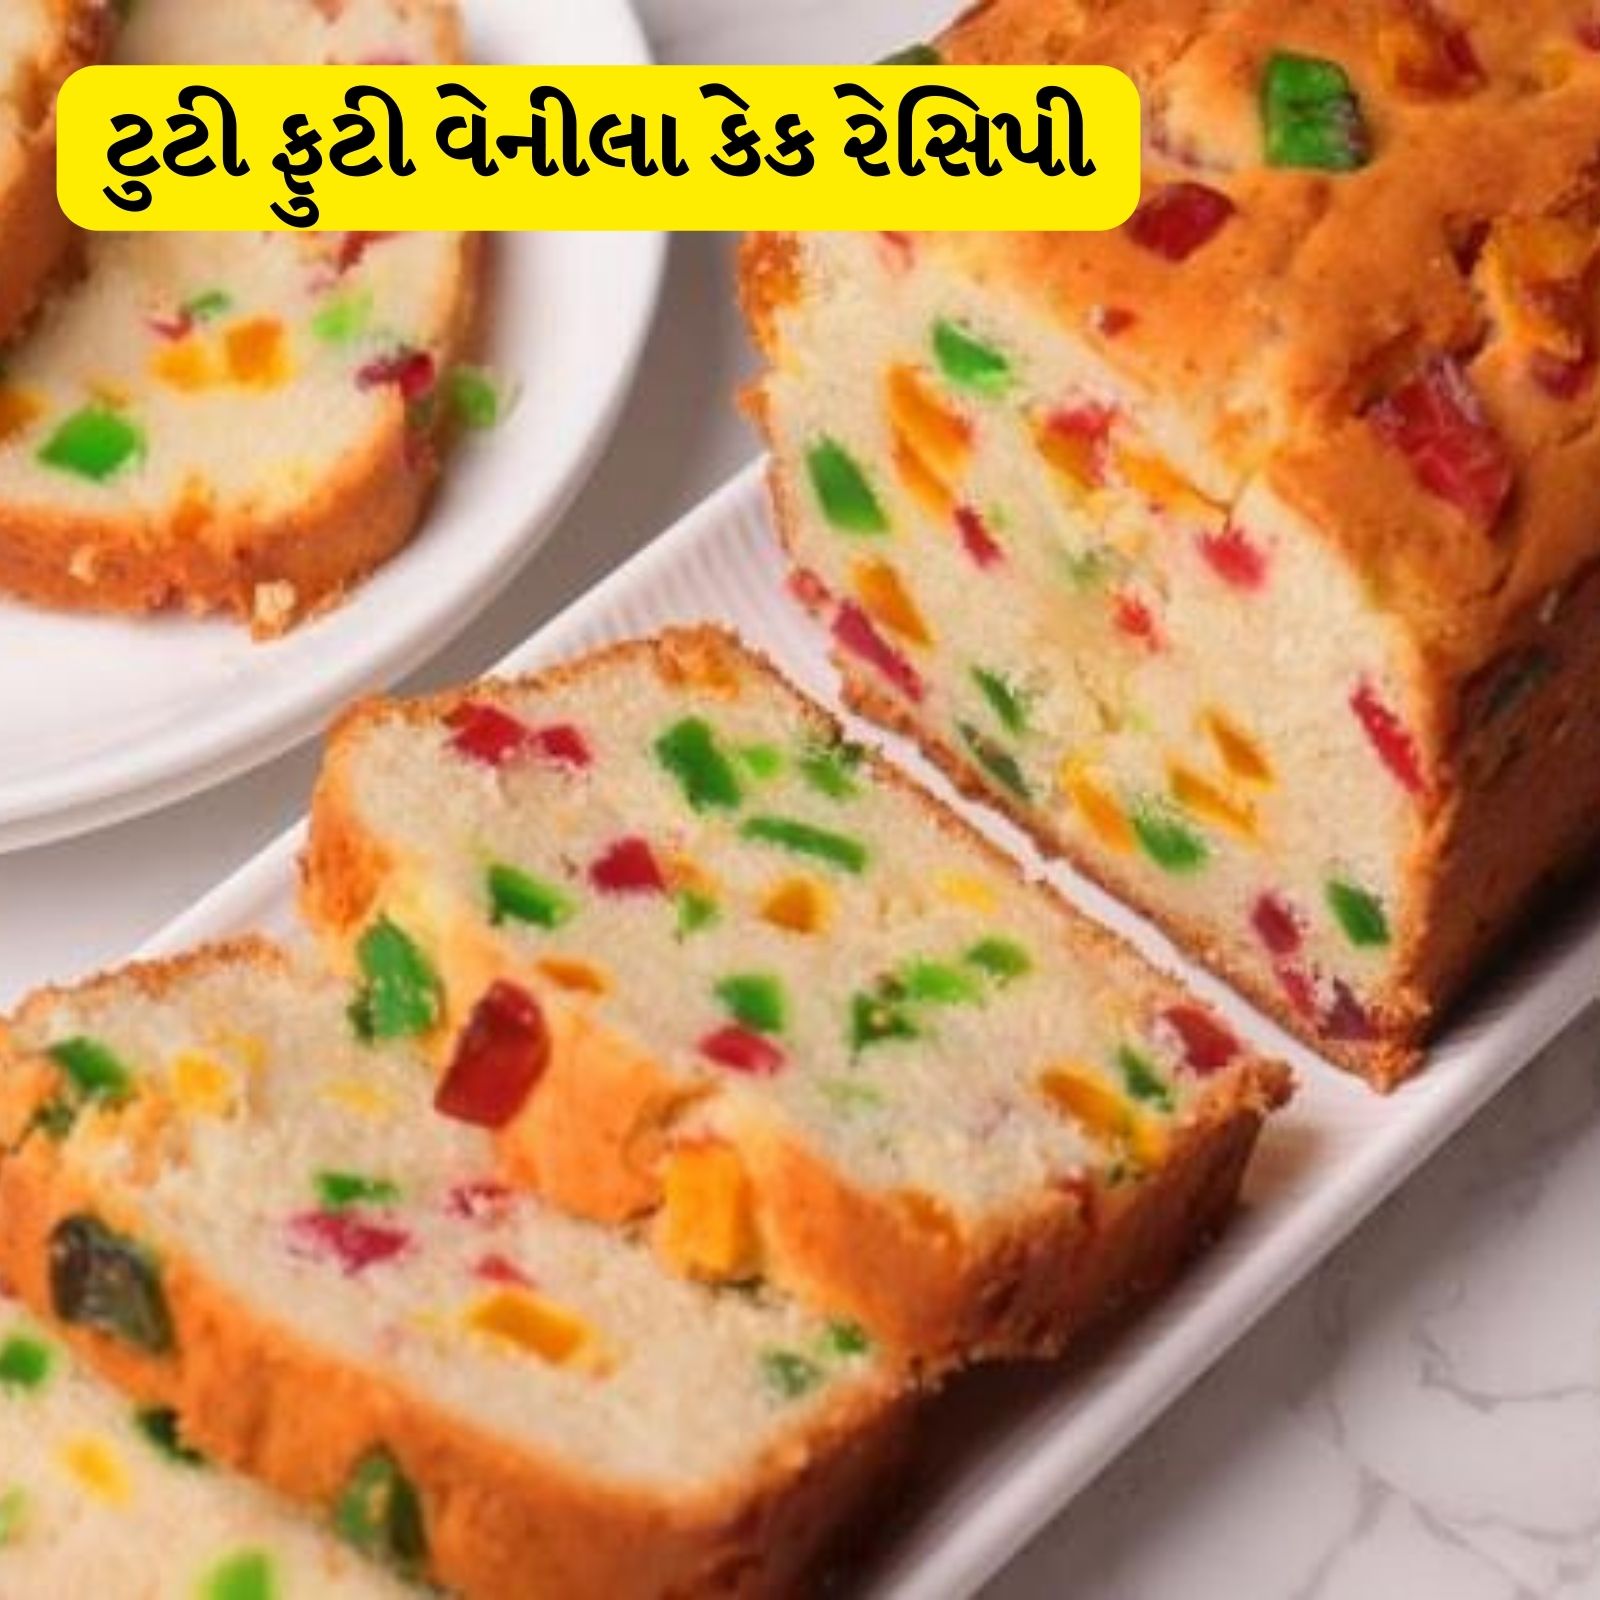 Vidhi purohit દ્વારા રેસીપી બનાના પેન કેક (Banana pan cake recipe in  Gujarati) - કૂકપૅડ